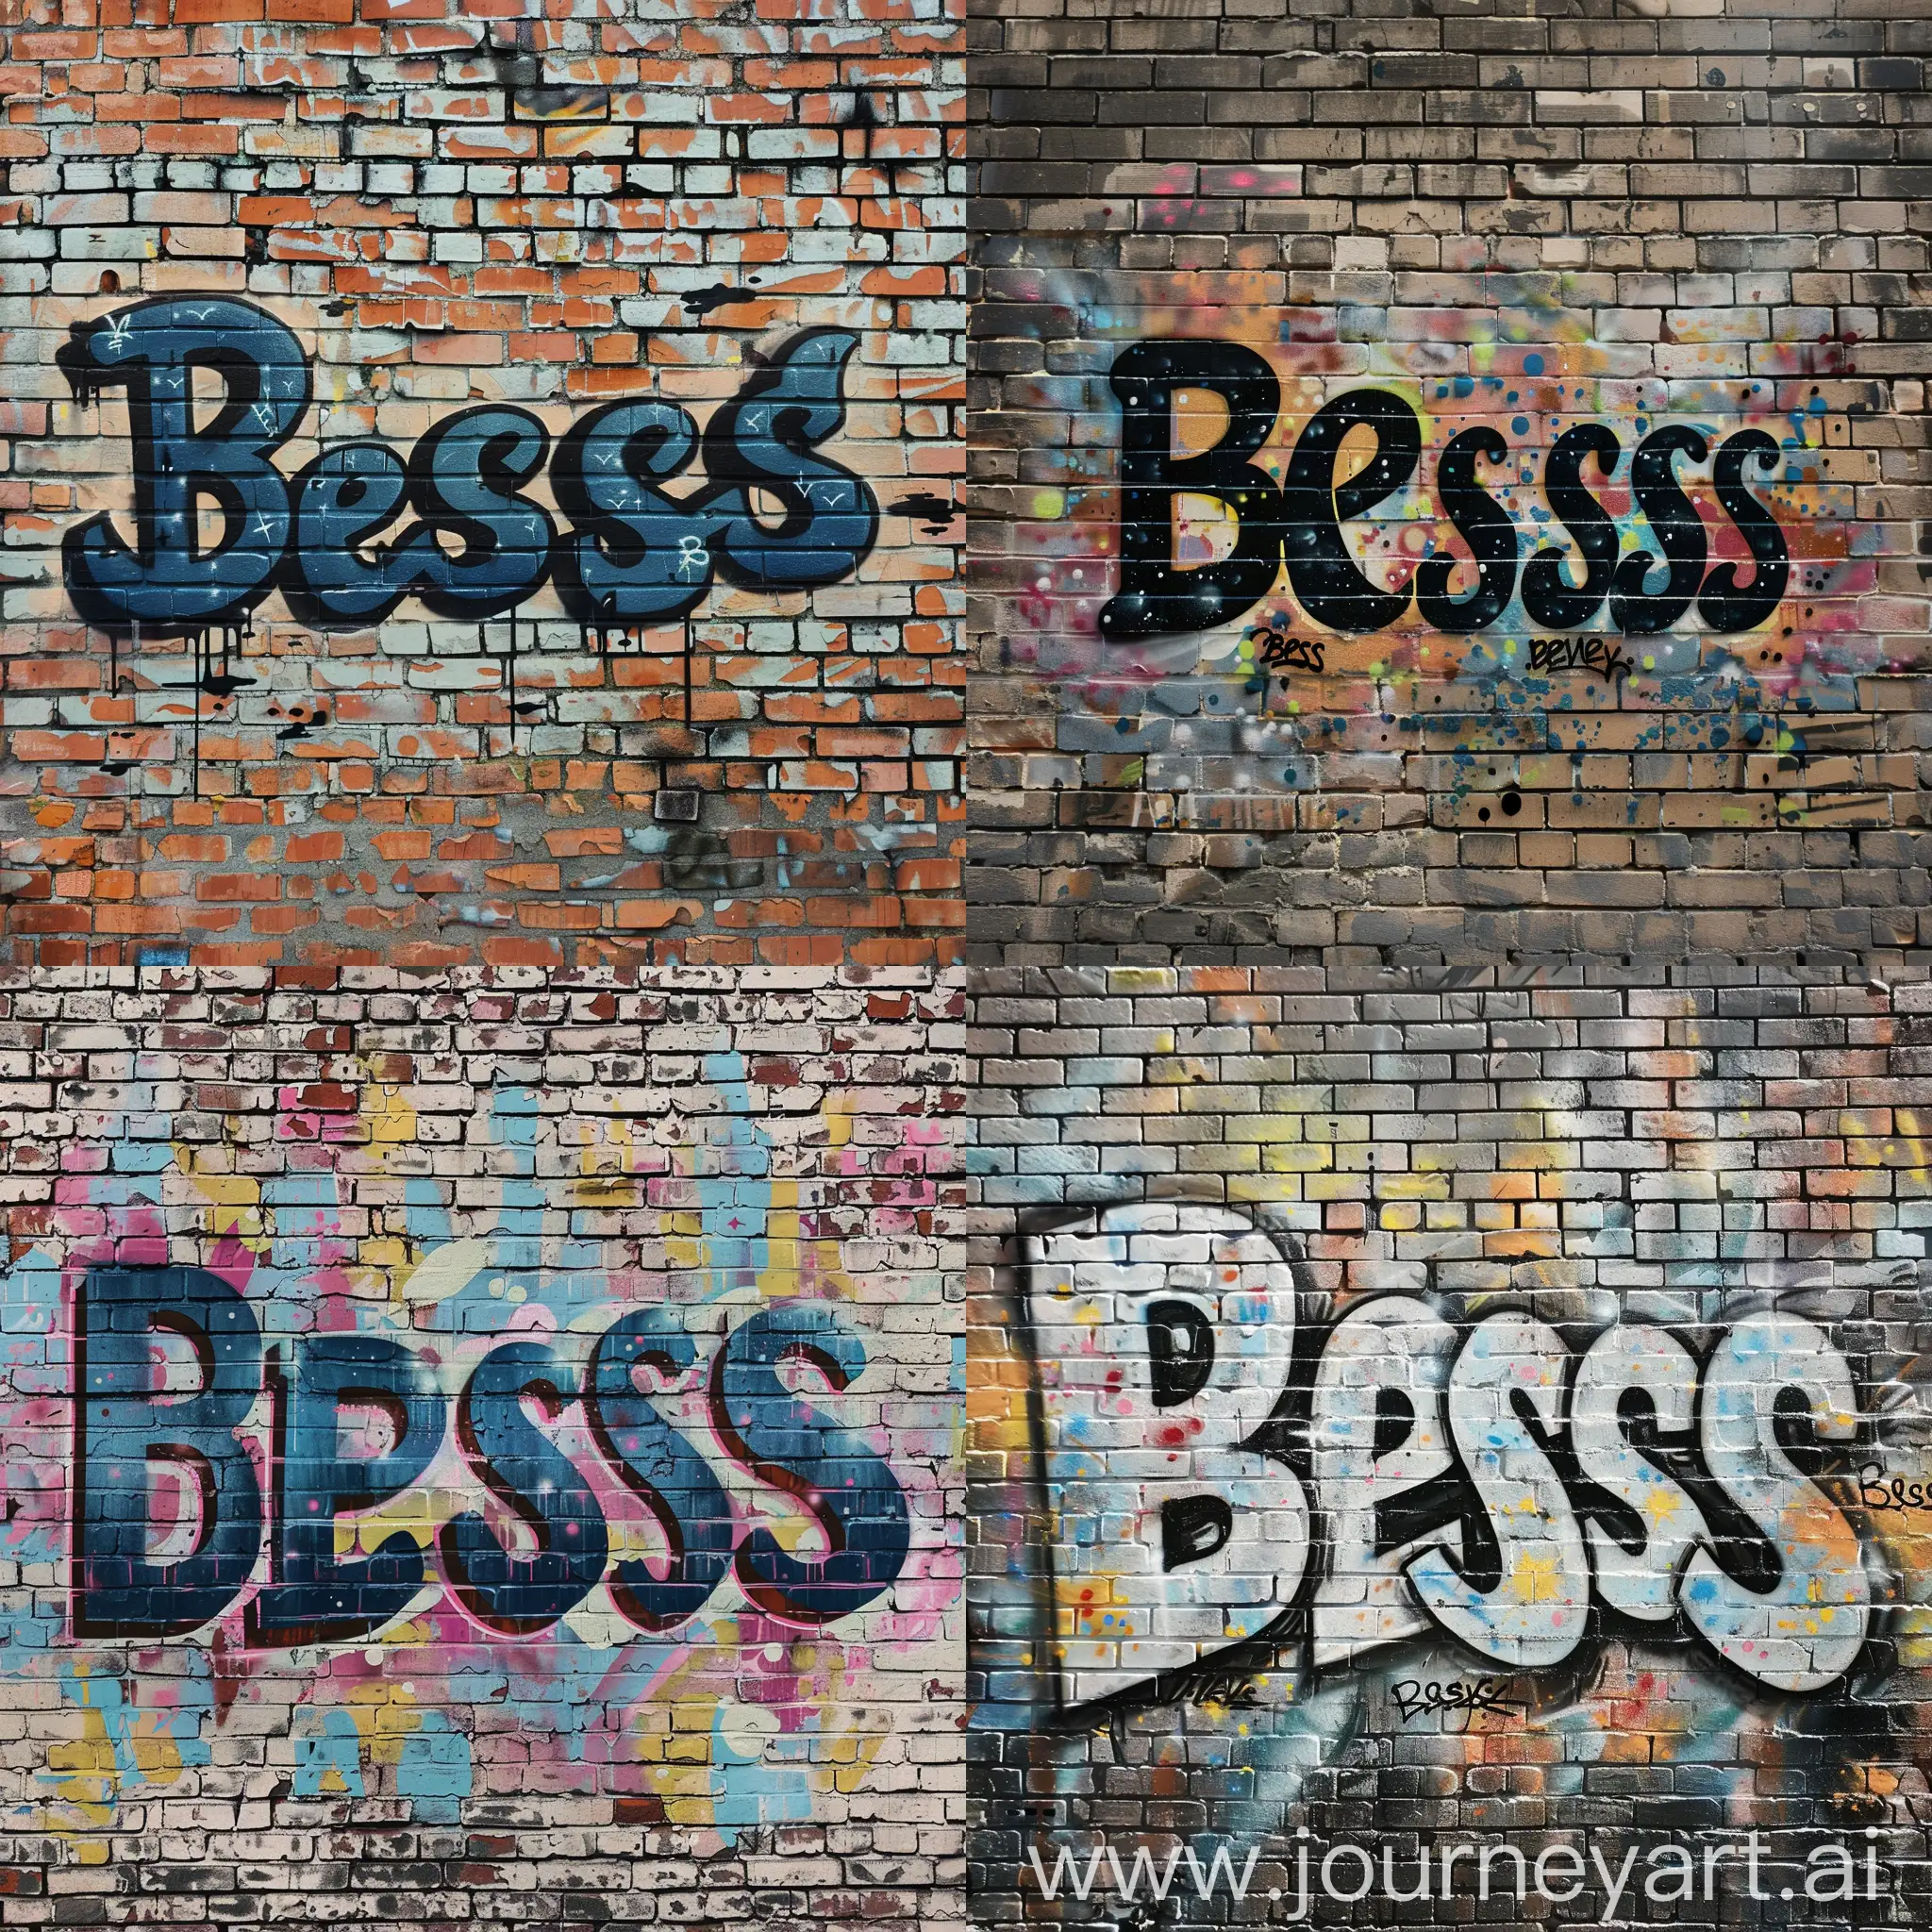 Urban-Art-Graffiti-Blessing-on-Brick-Wall